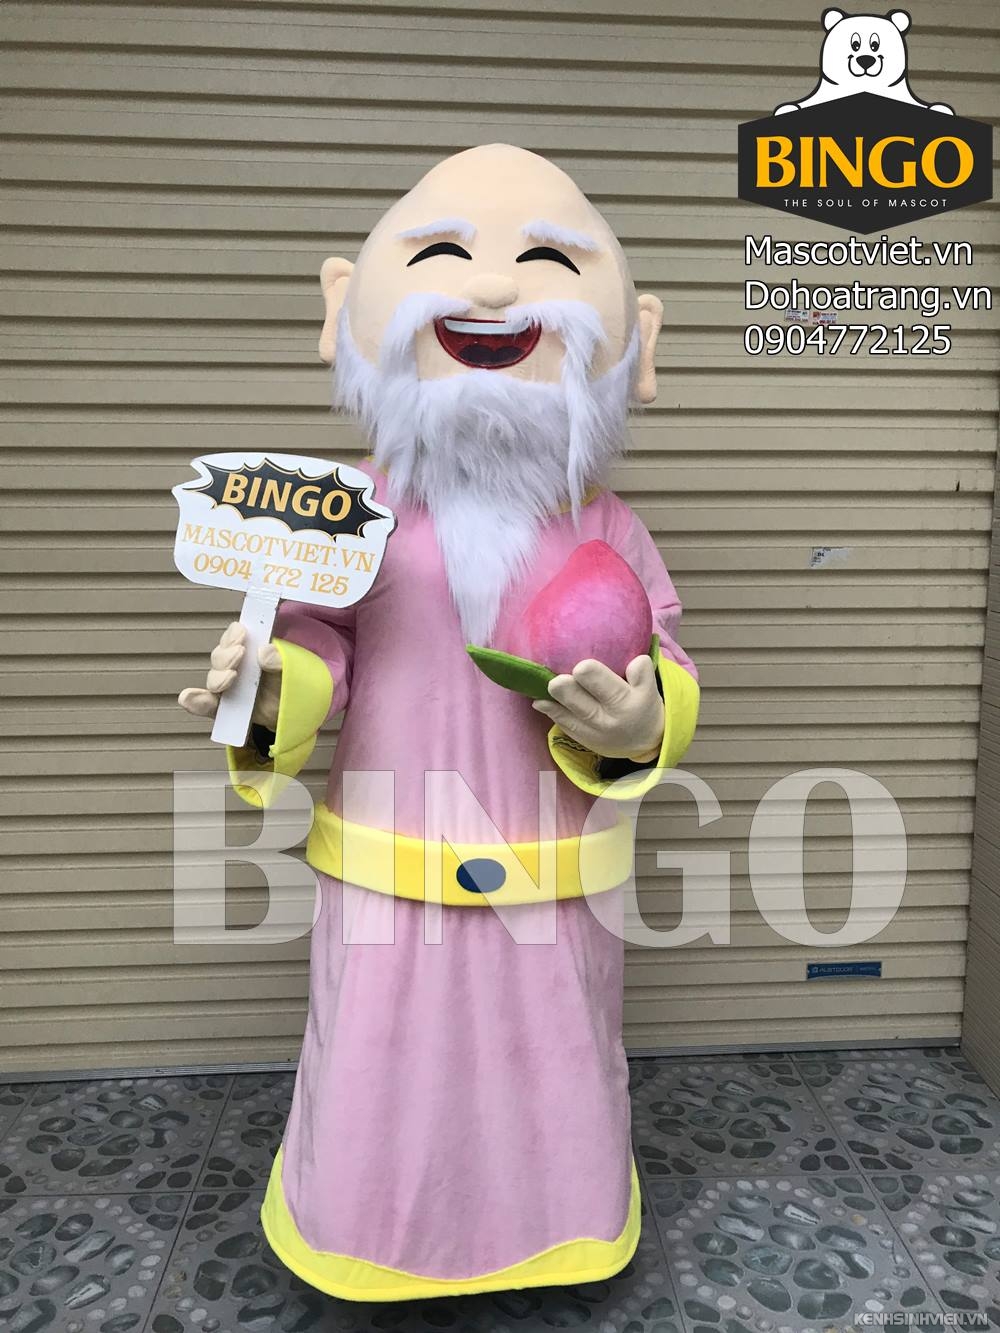 mascot-ong-tho-bingo-costumes-0904772125.jpg